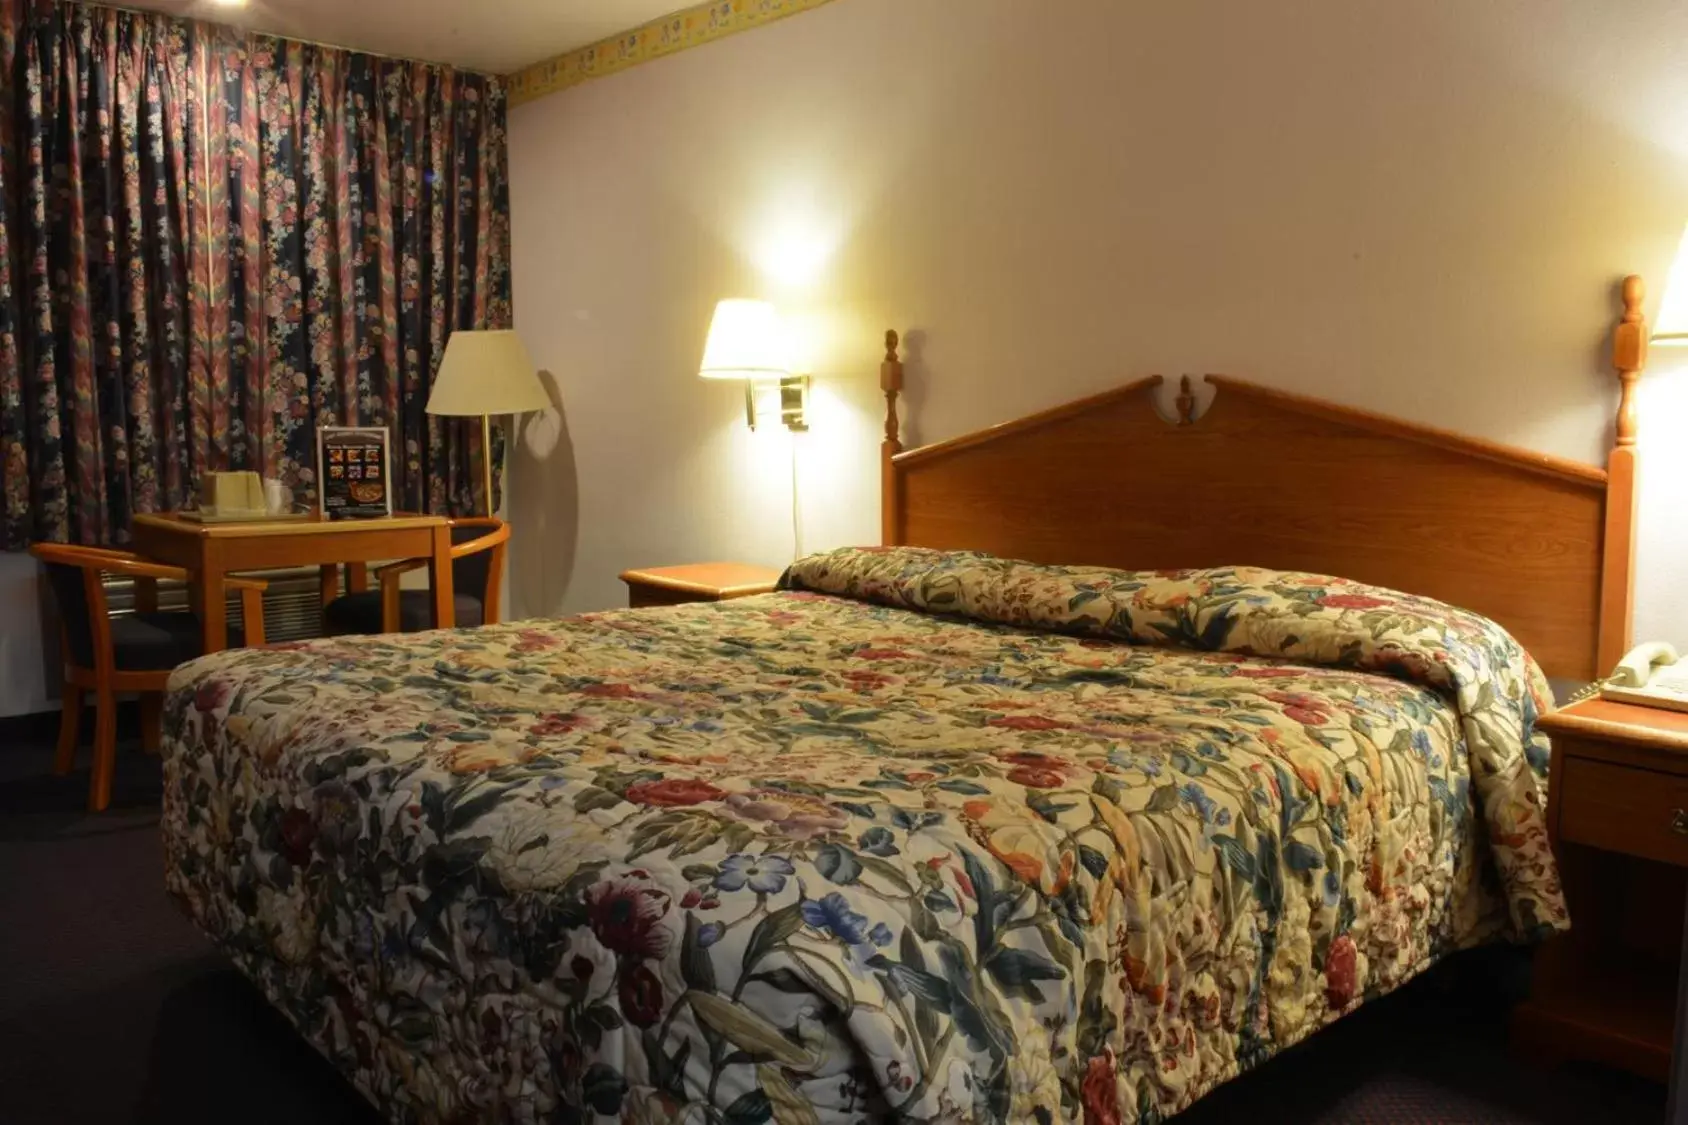 Bed, Room Photo in The Flamingo Motel San Jose